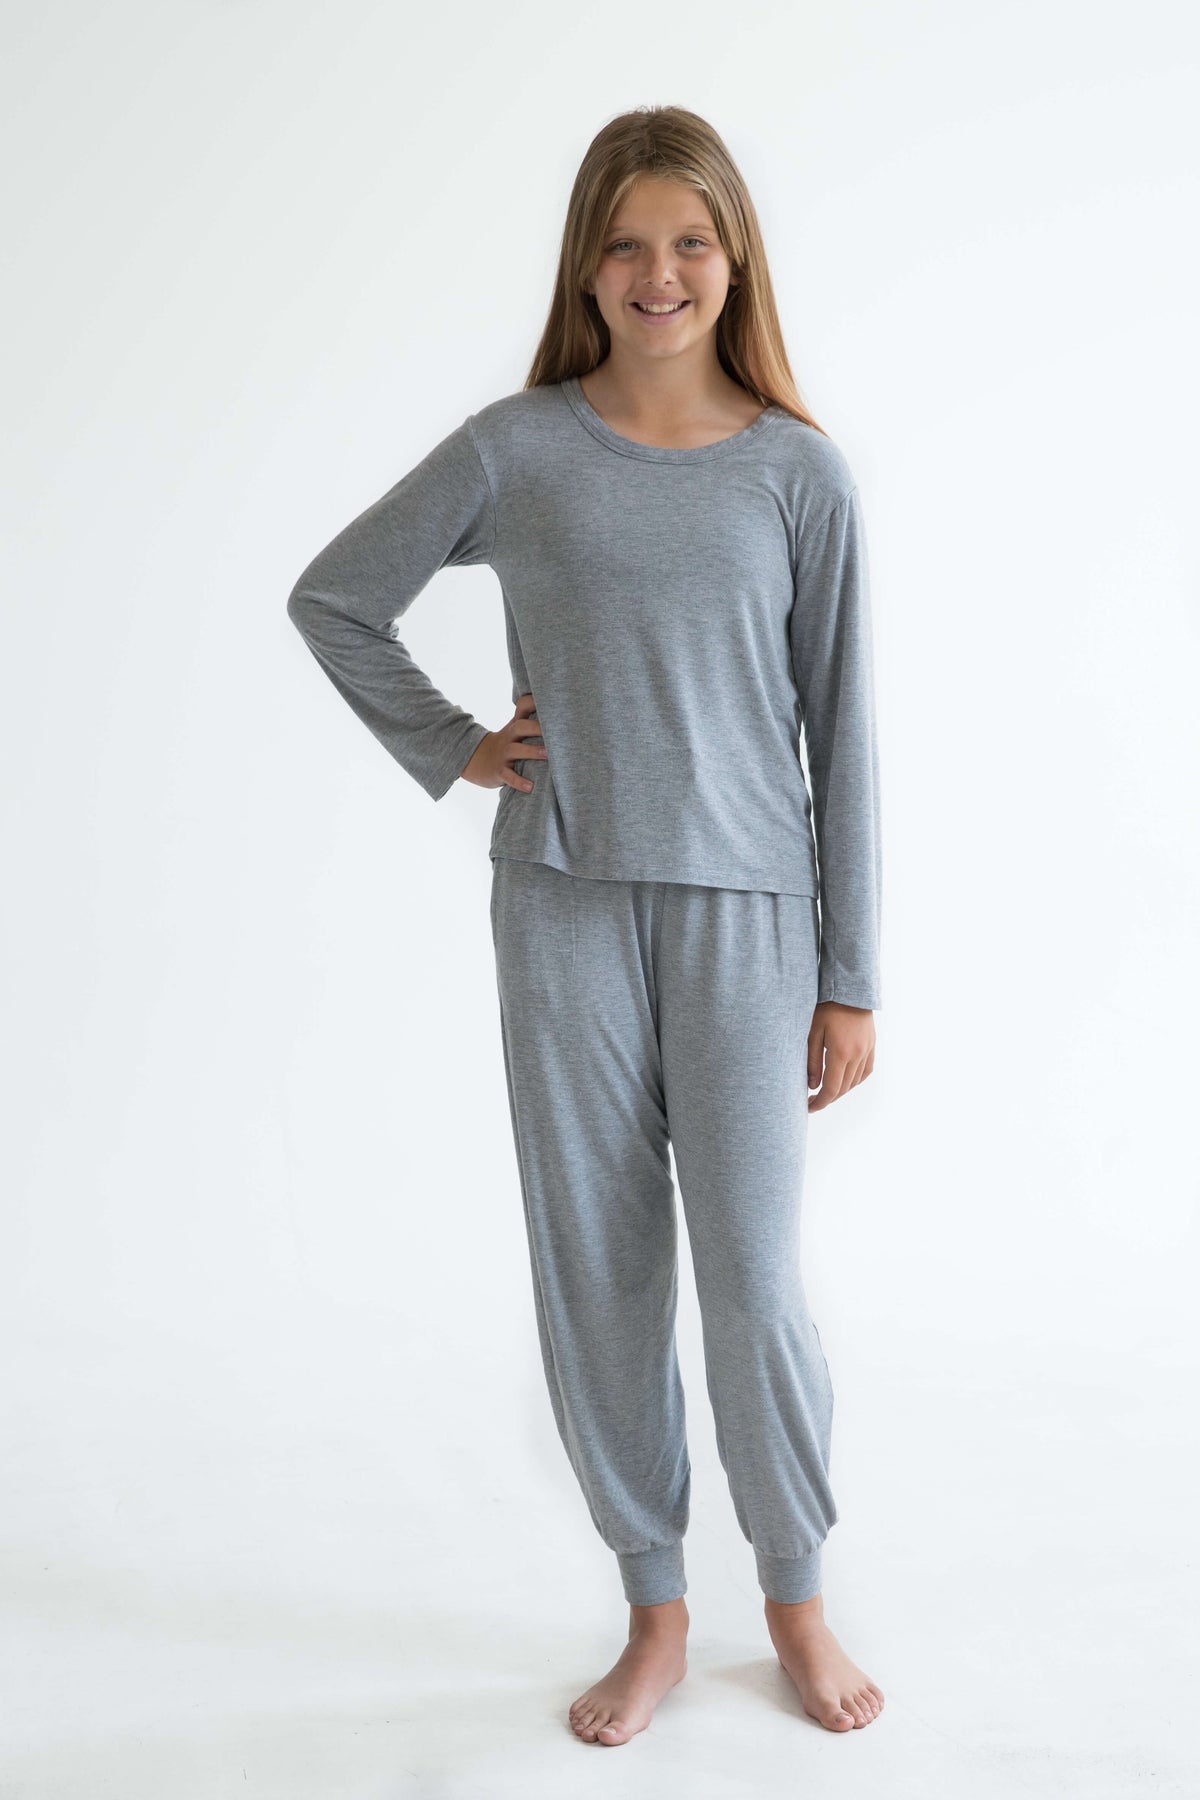 grey girls winter pyjamas set long pants and long sleeve top by Love Haidee Australia front view Chloe